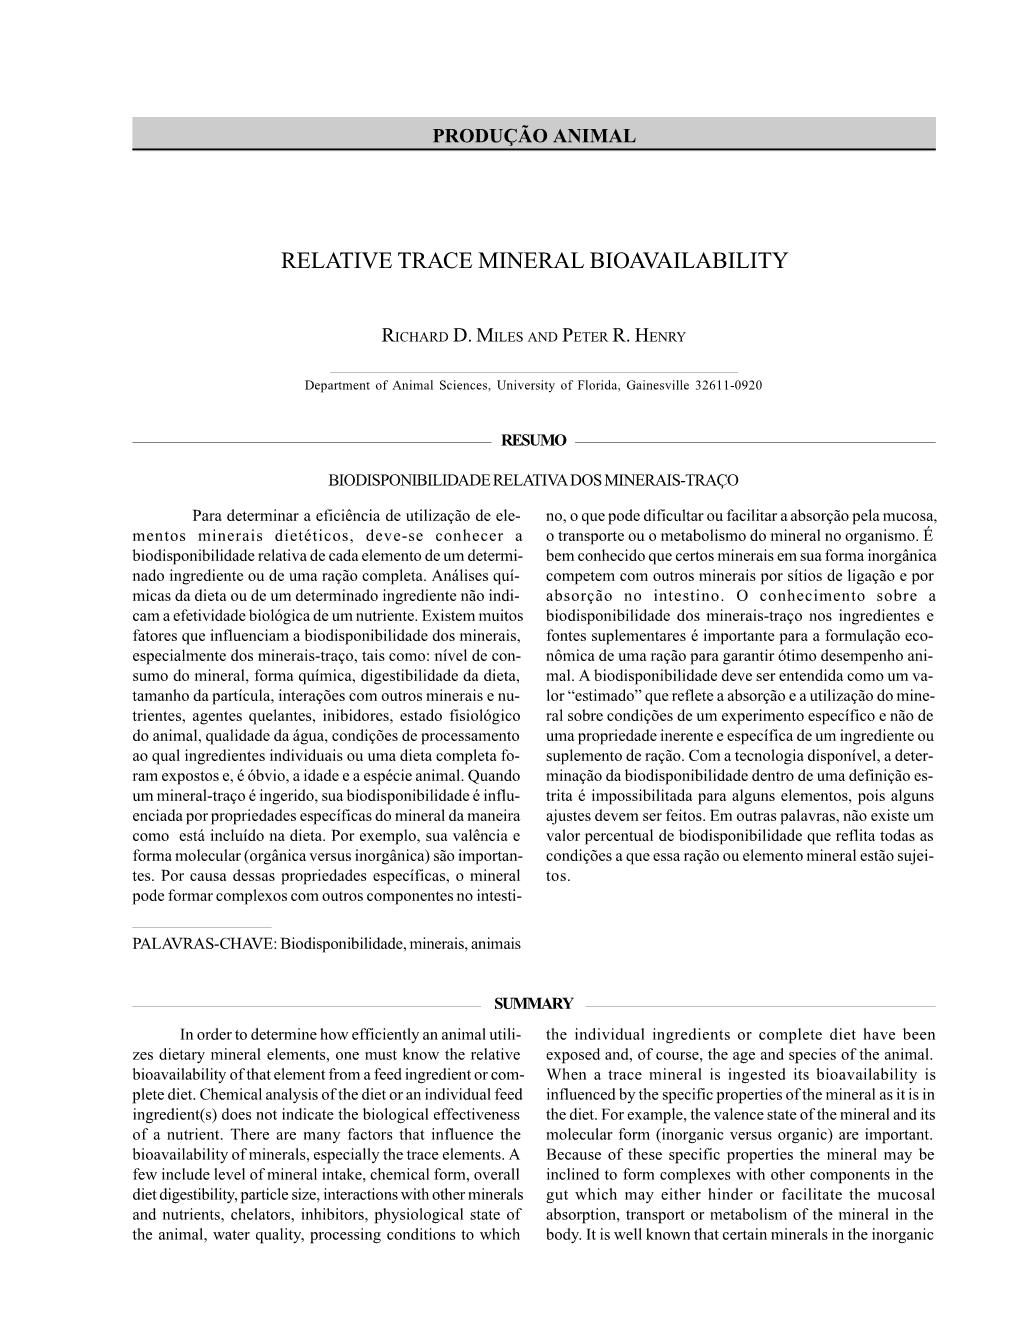 Relative Trace Mineral Bioavailability